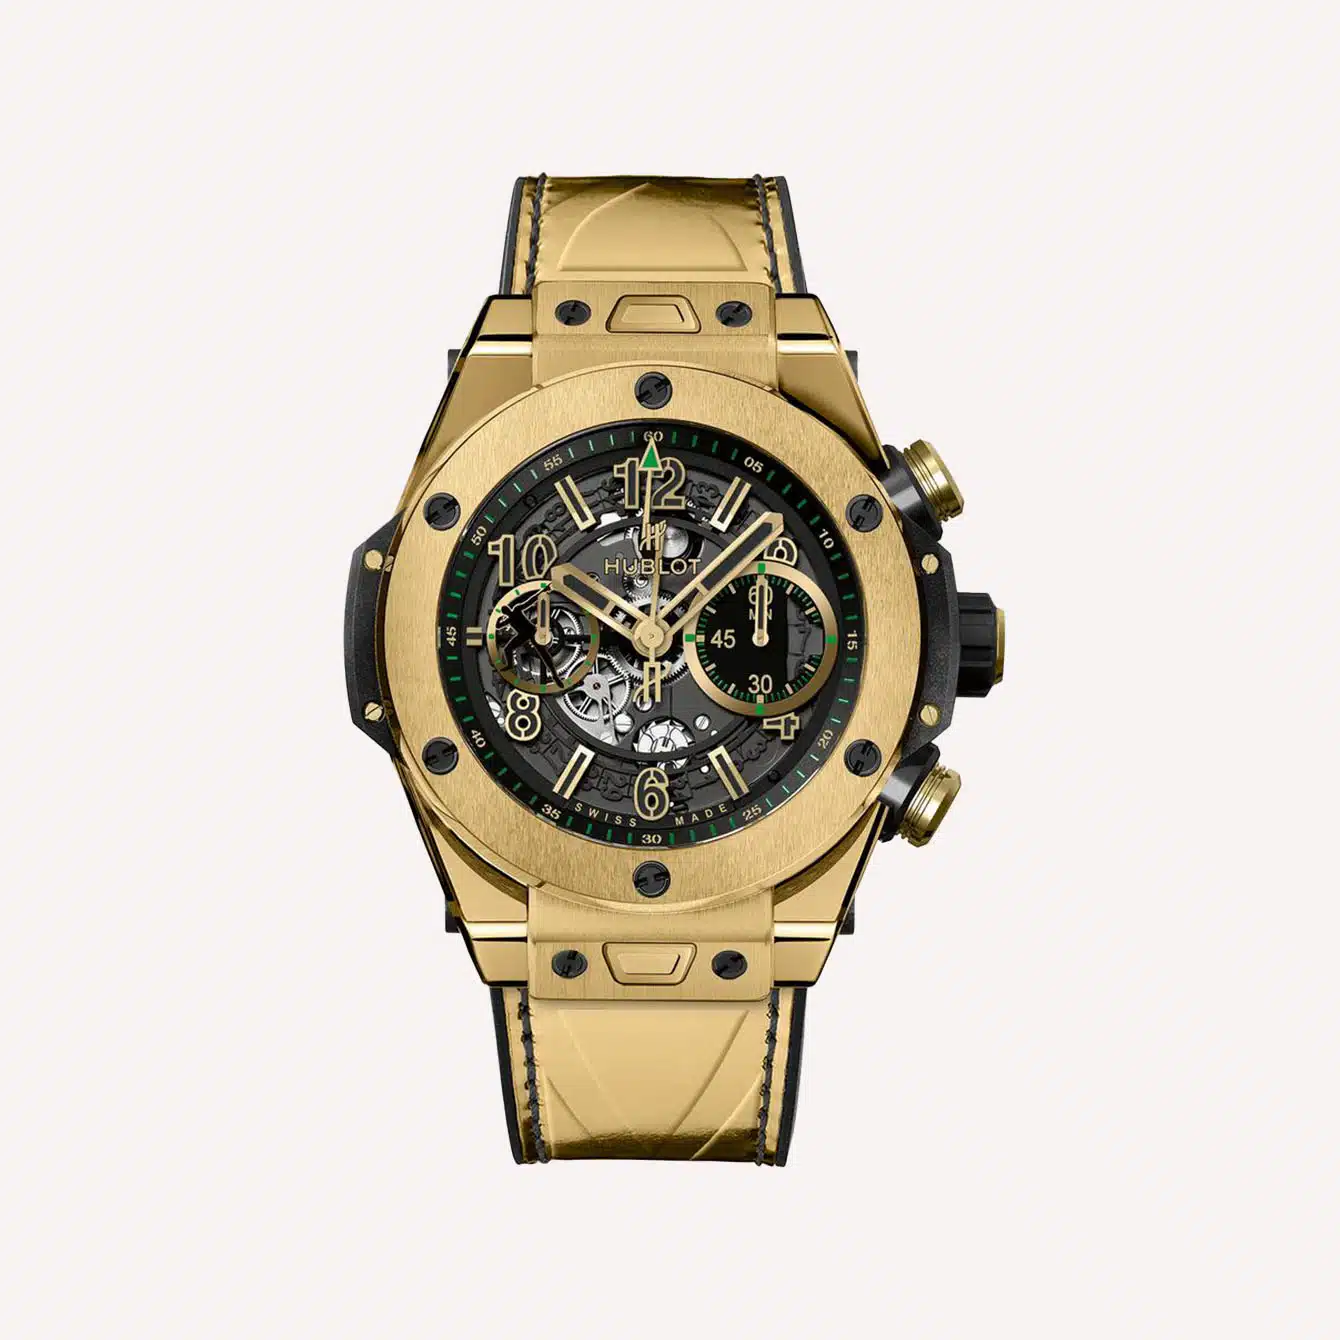 Big-Bang-Unico-Usain-Bolt-yellow-gold-watch